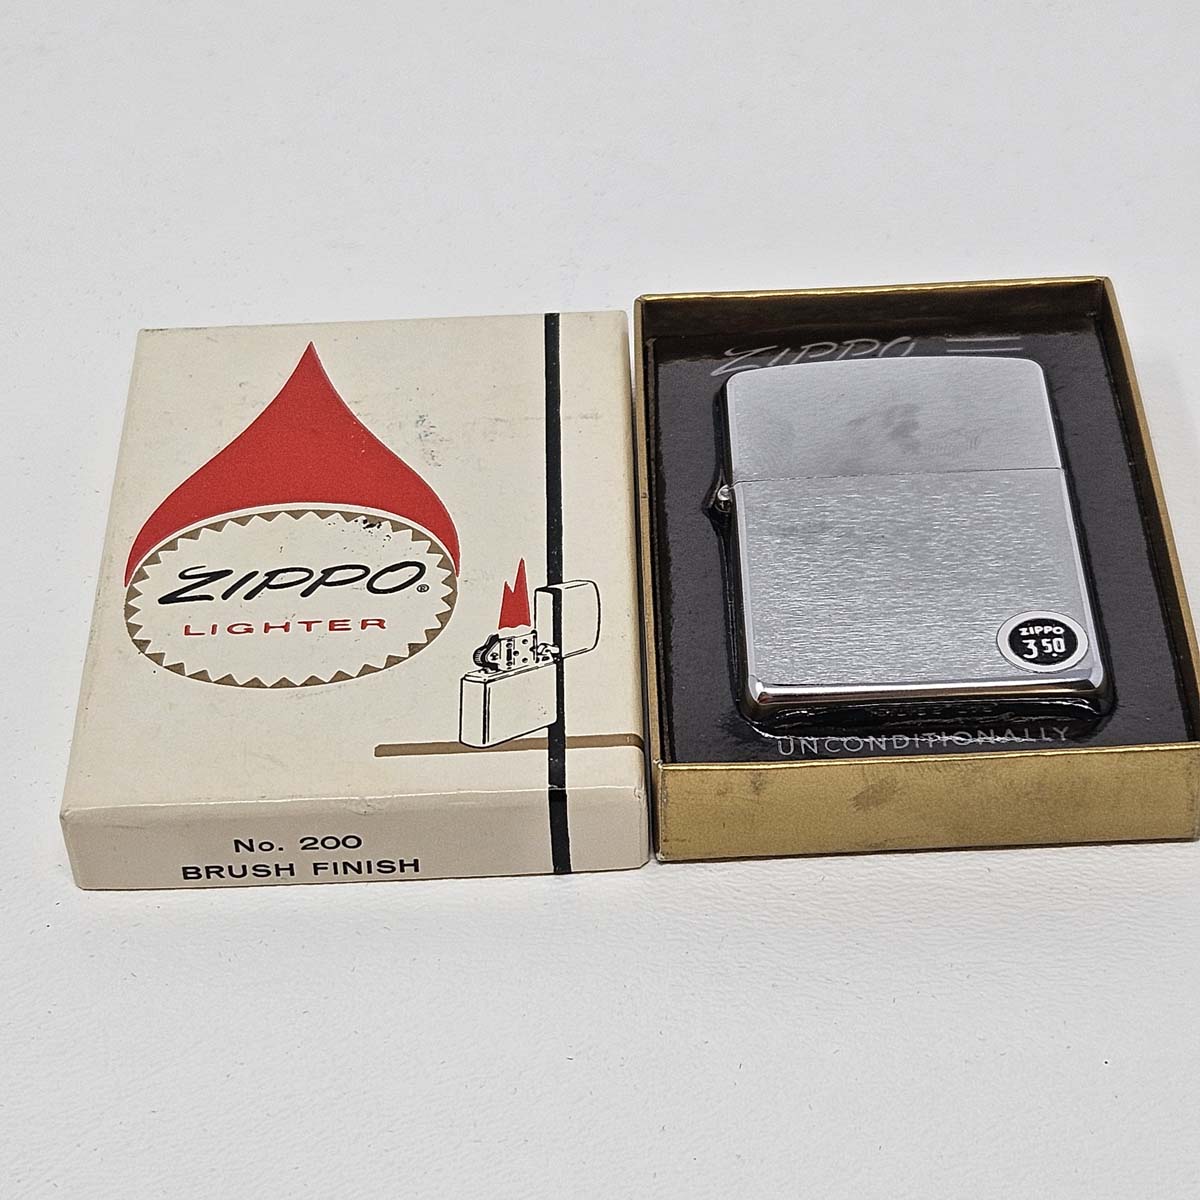 Vintage No. 200 Brushed Finish Zippo Lighter with Original Box